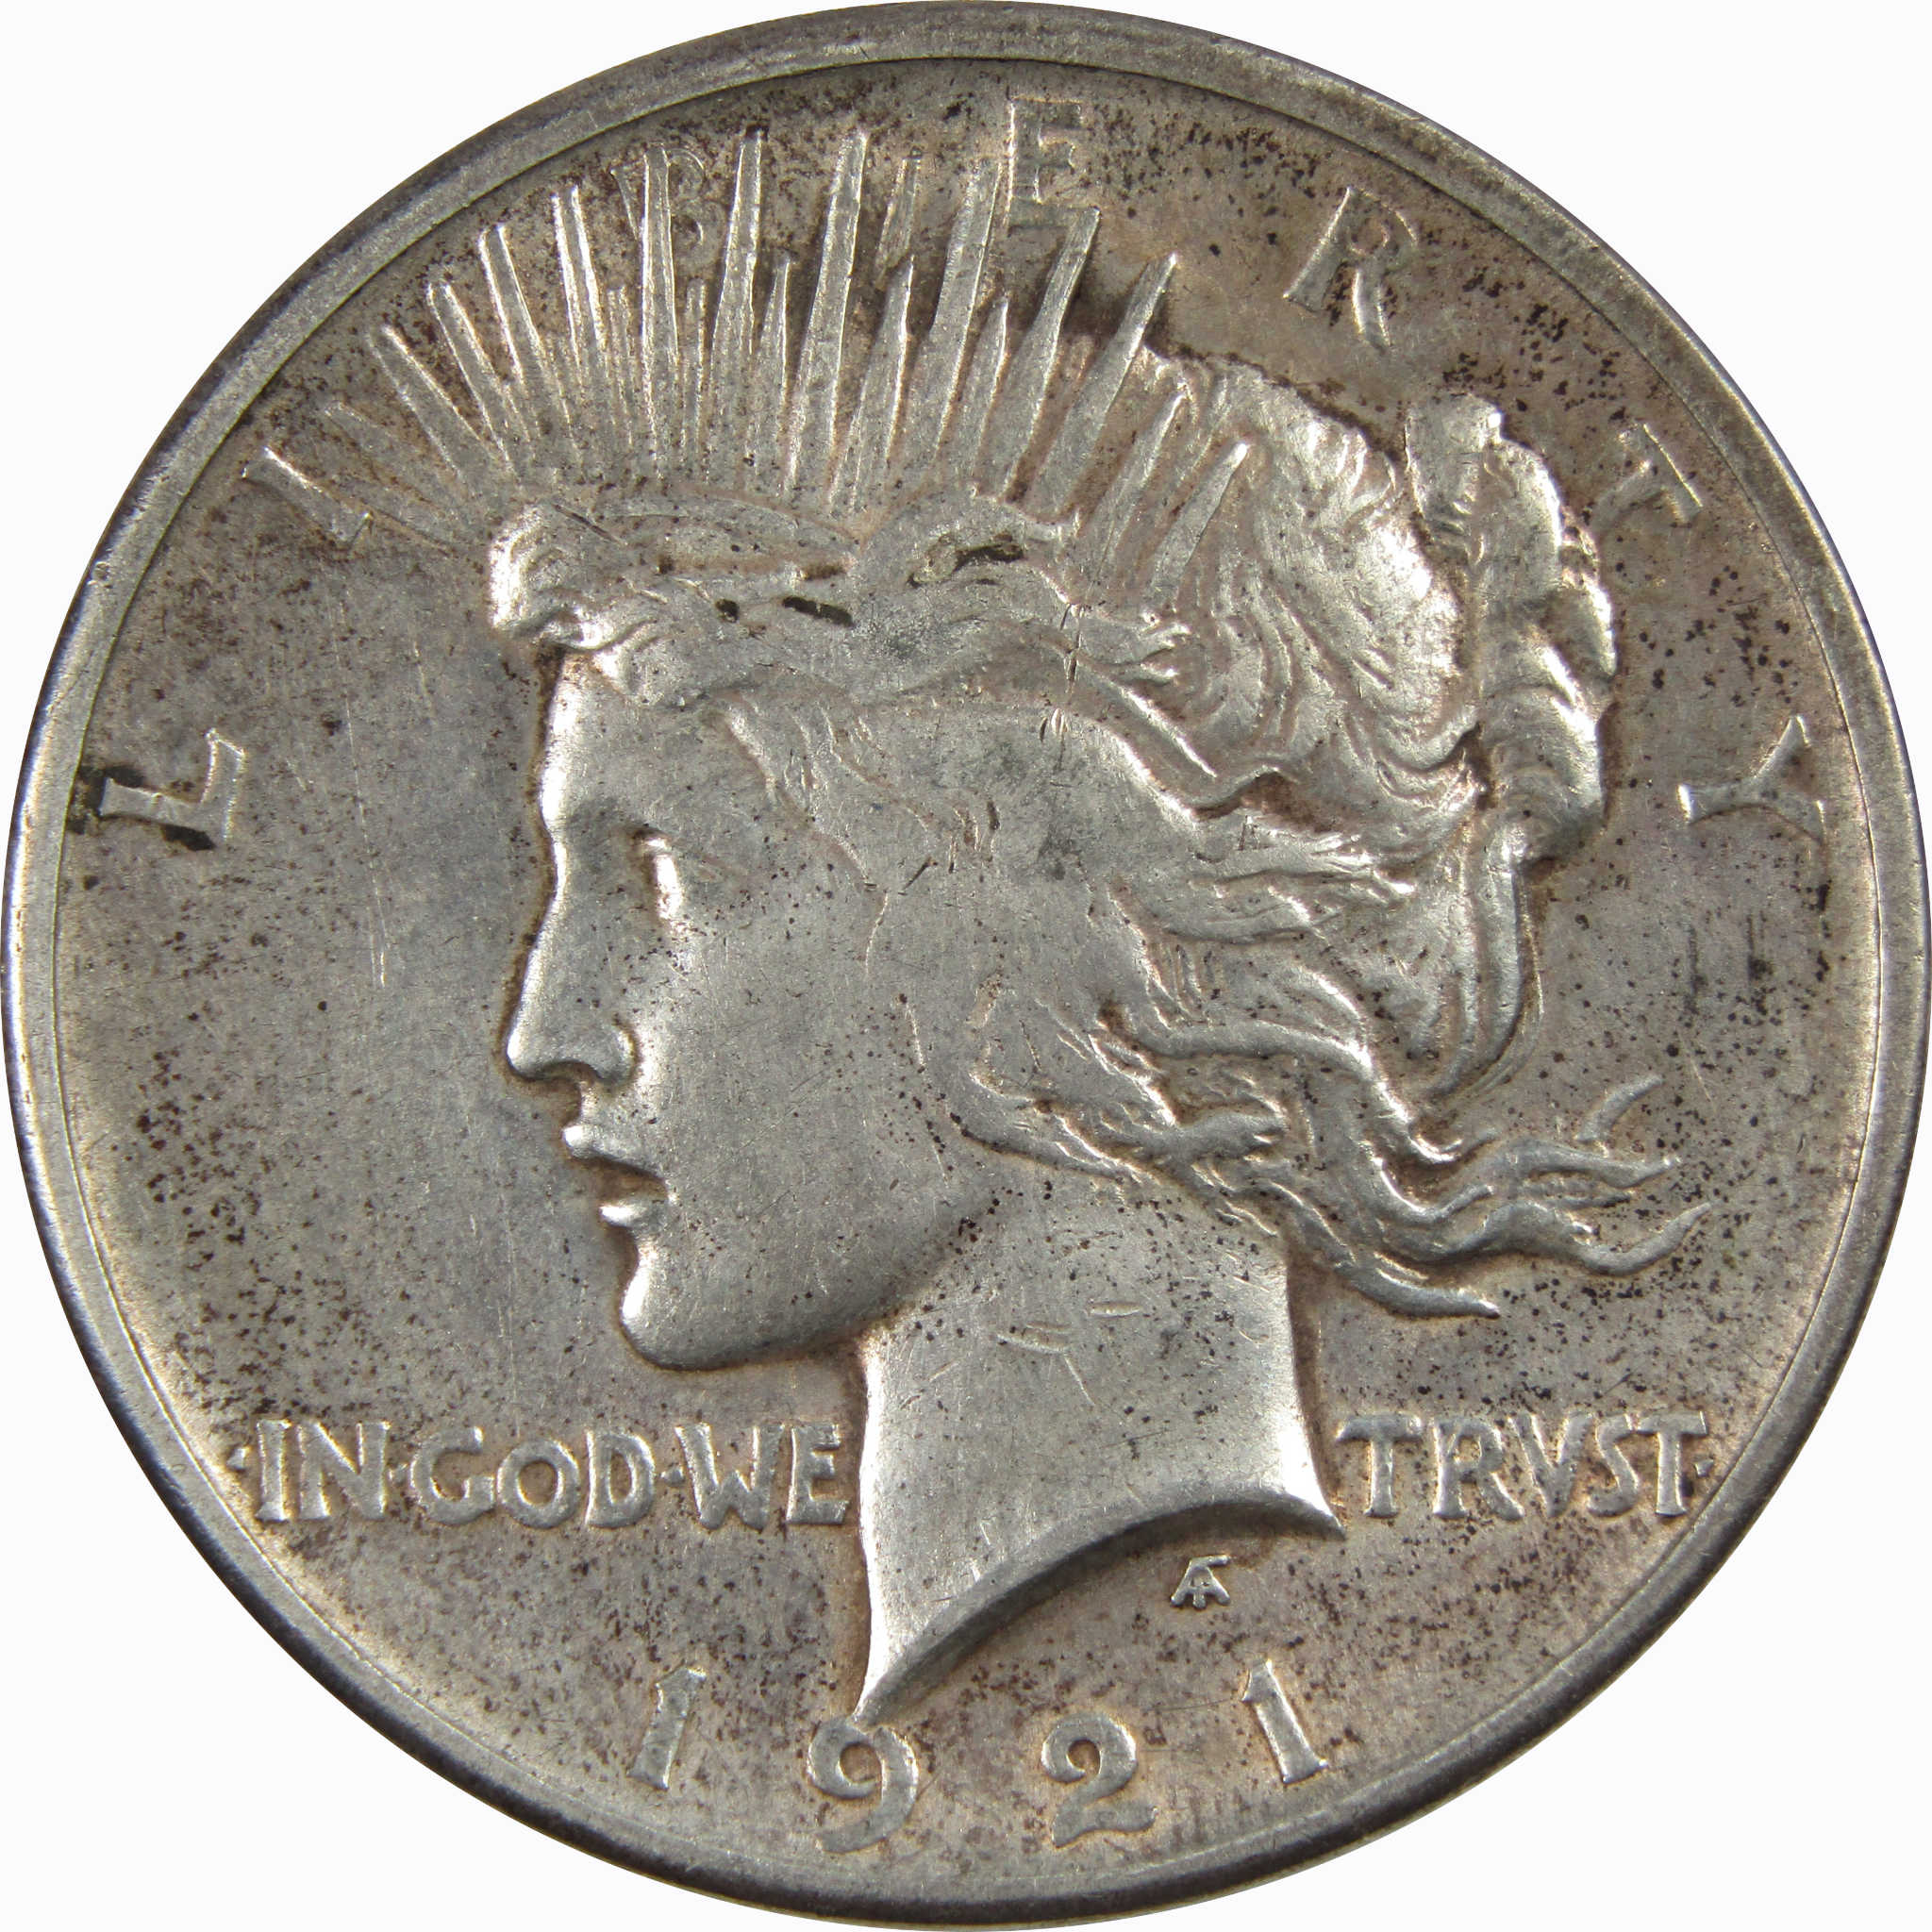 1921 High Relief Peace Dollar VF Very Fine 90% Silver Coin SKU:I4406